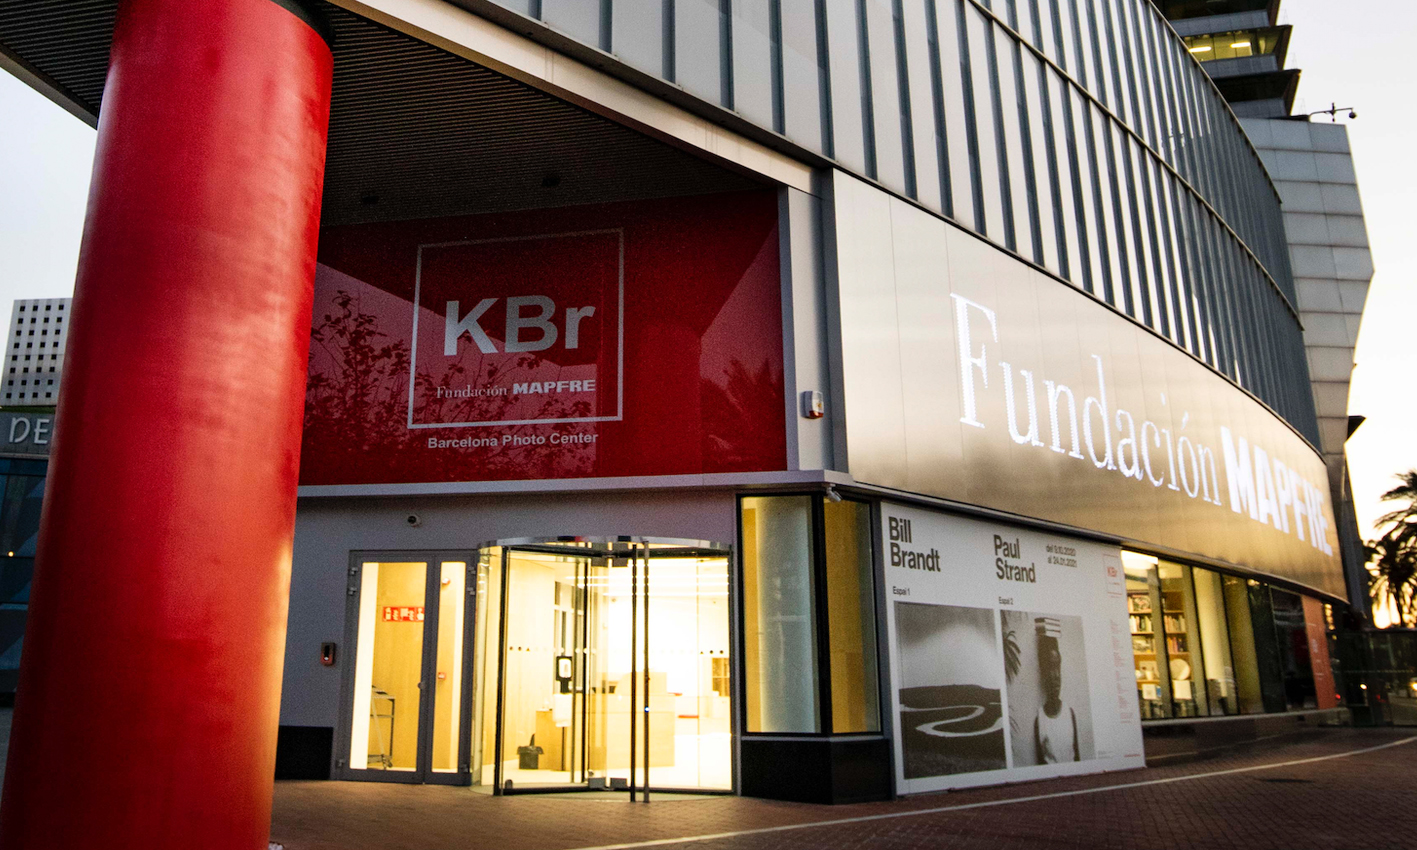 Paul Strand i Bill Brandt inauguren KBr, el nou centre de Fotografia de la Fundación Mapfre a Barcelona